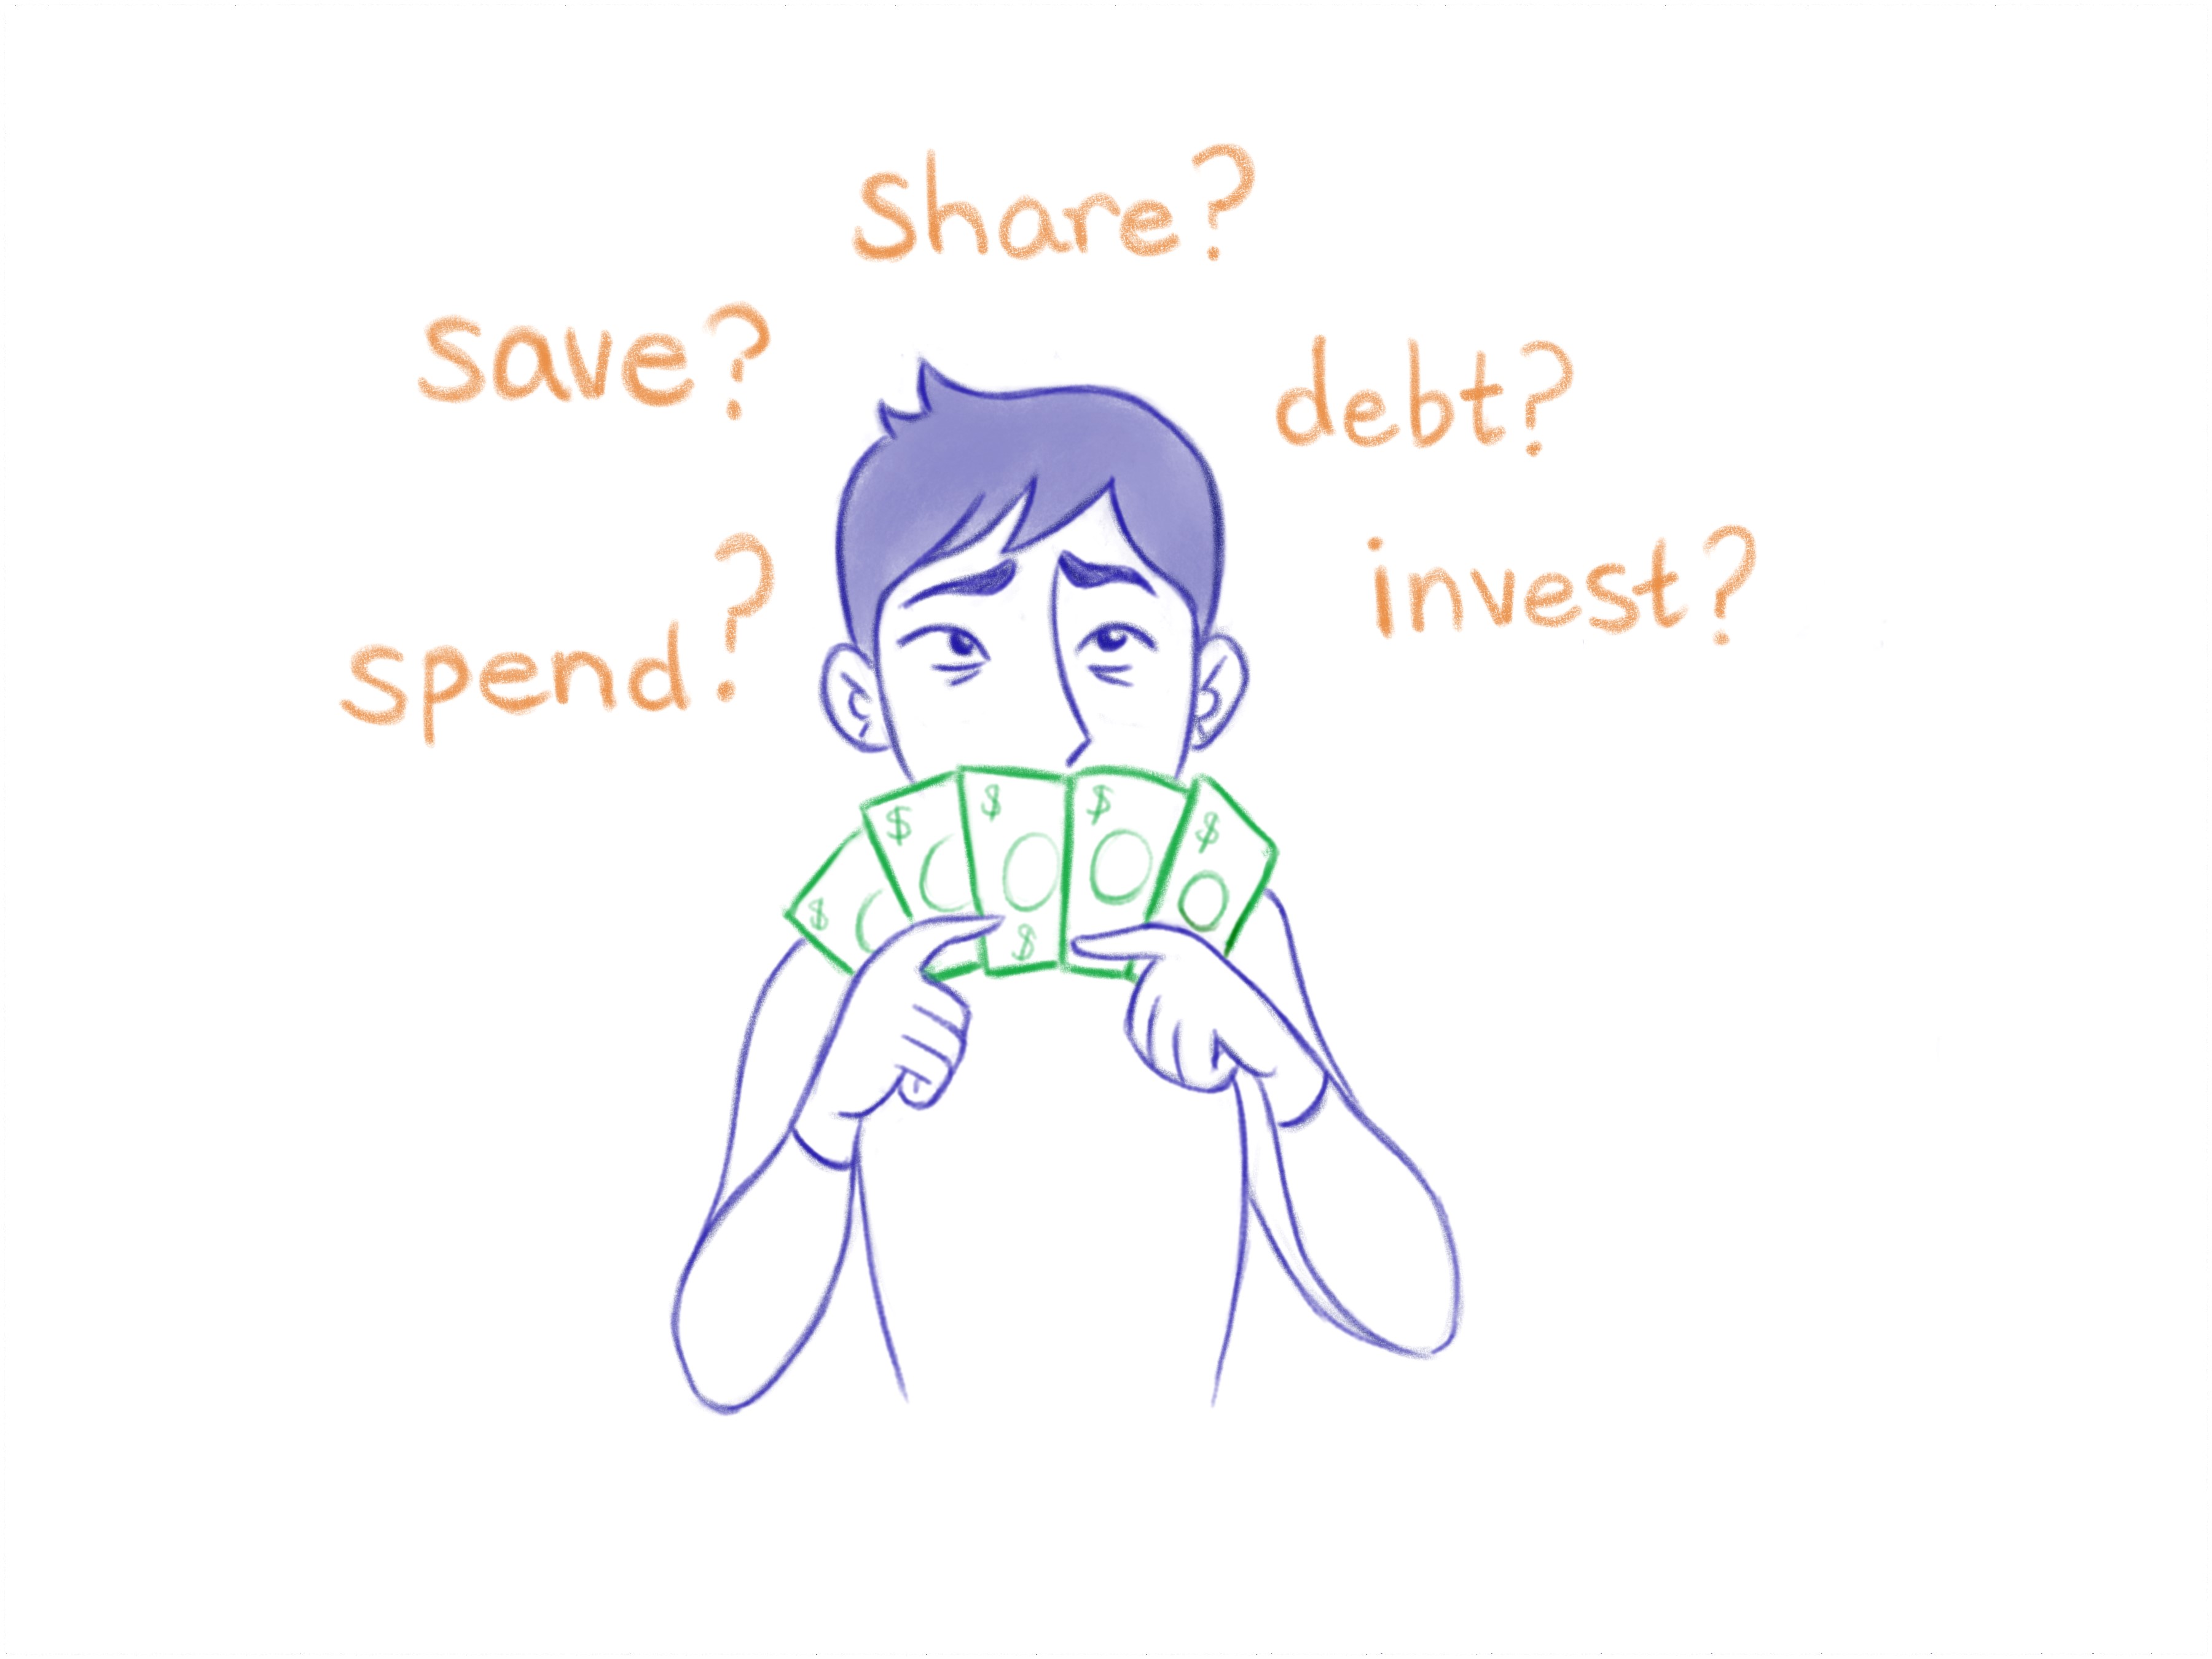 Image on deciding how to spend money